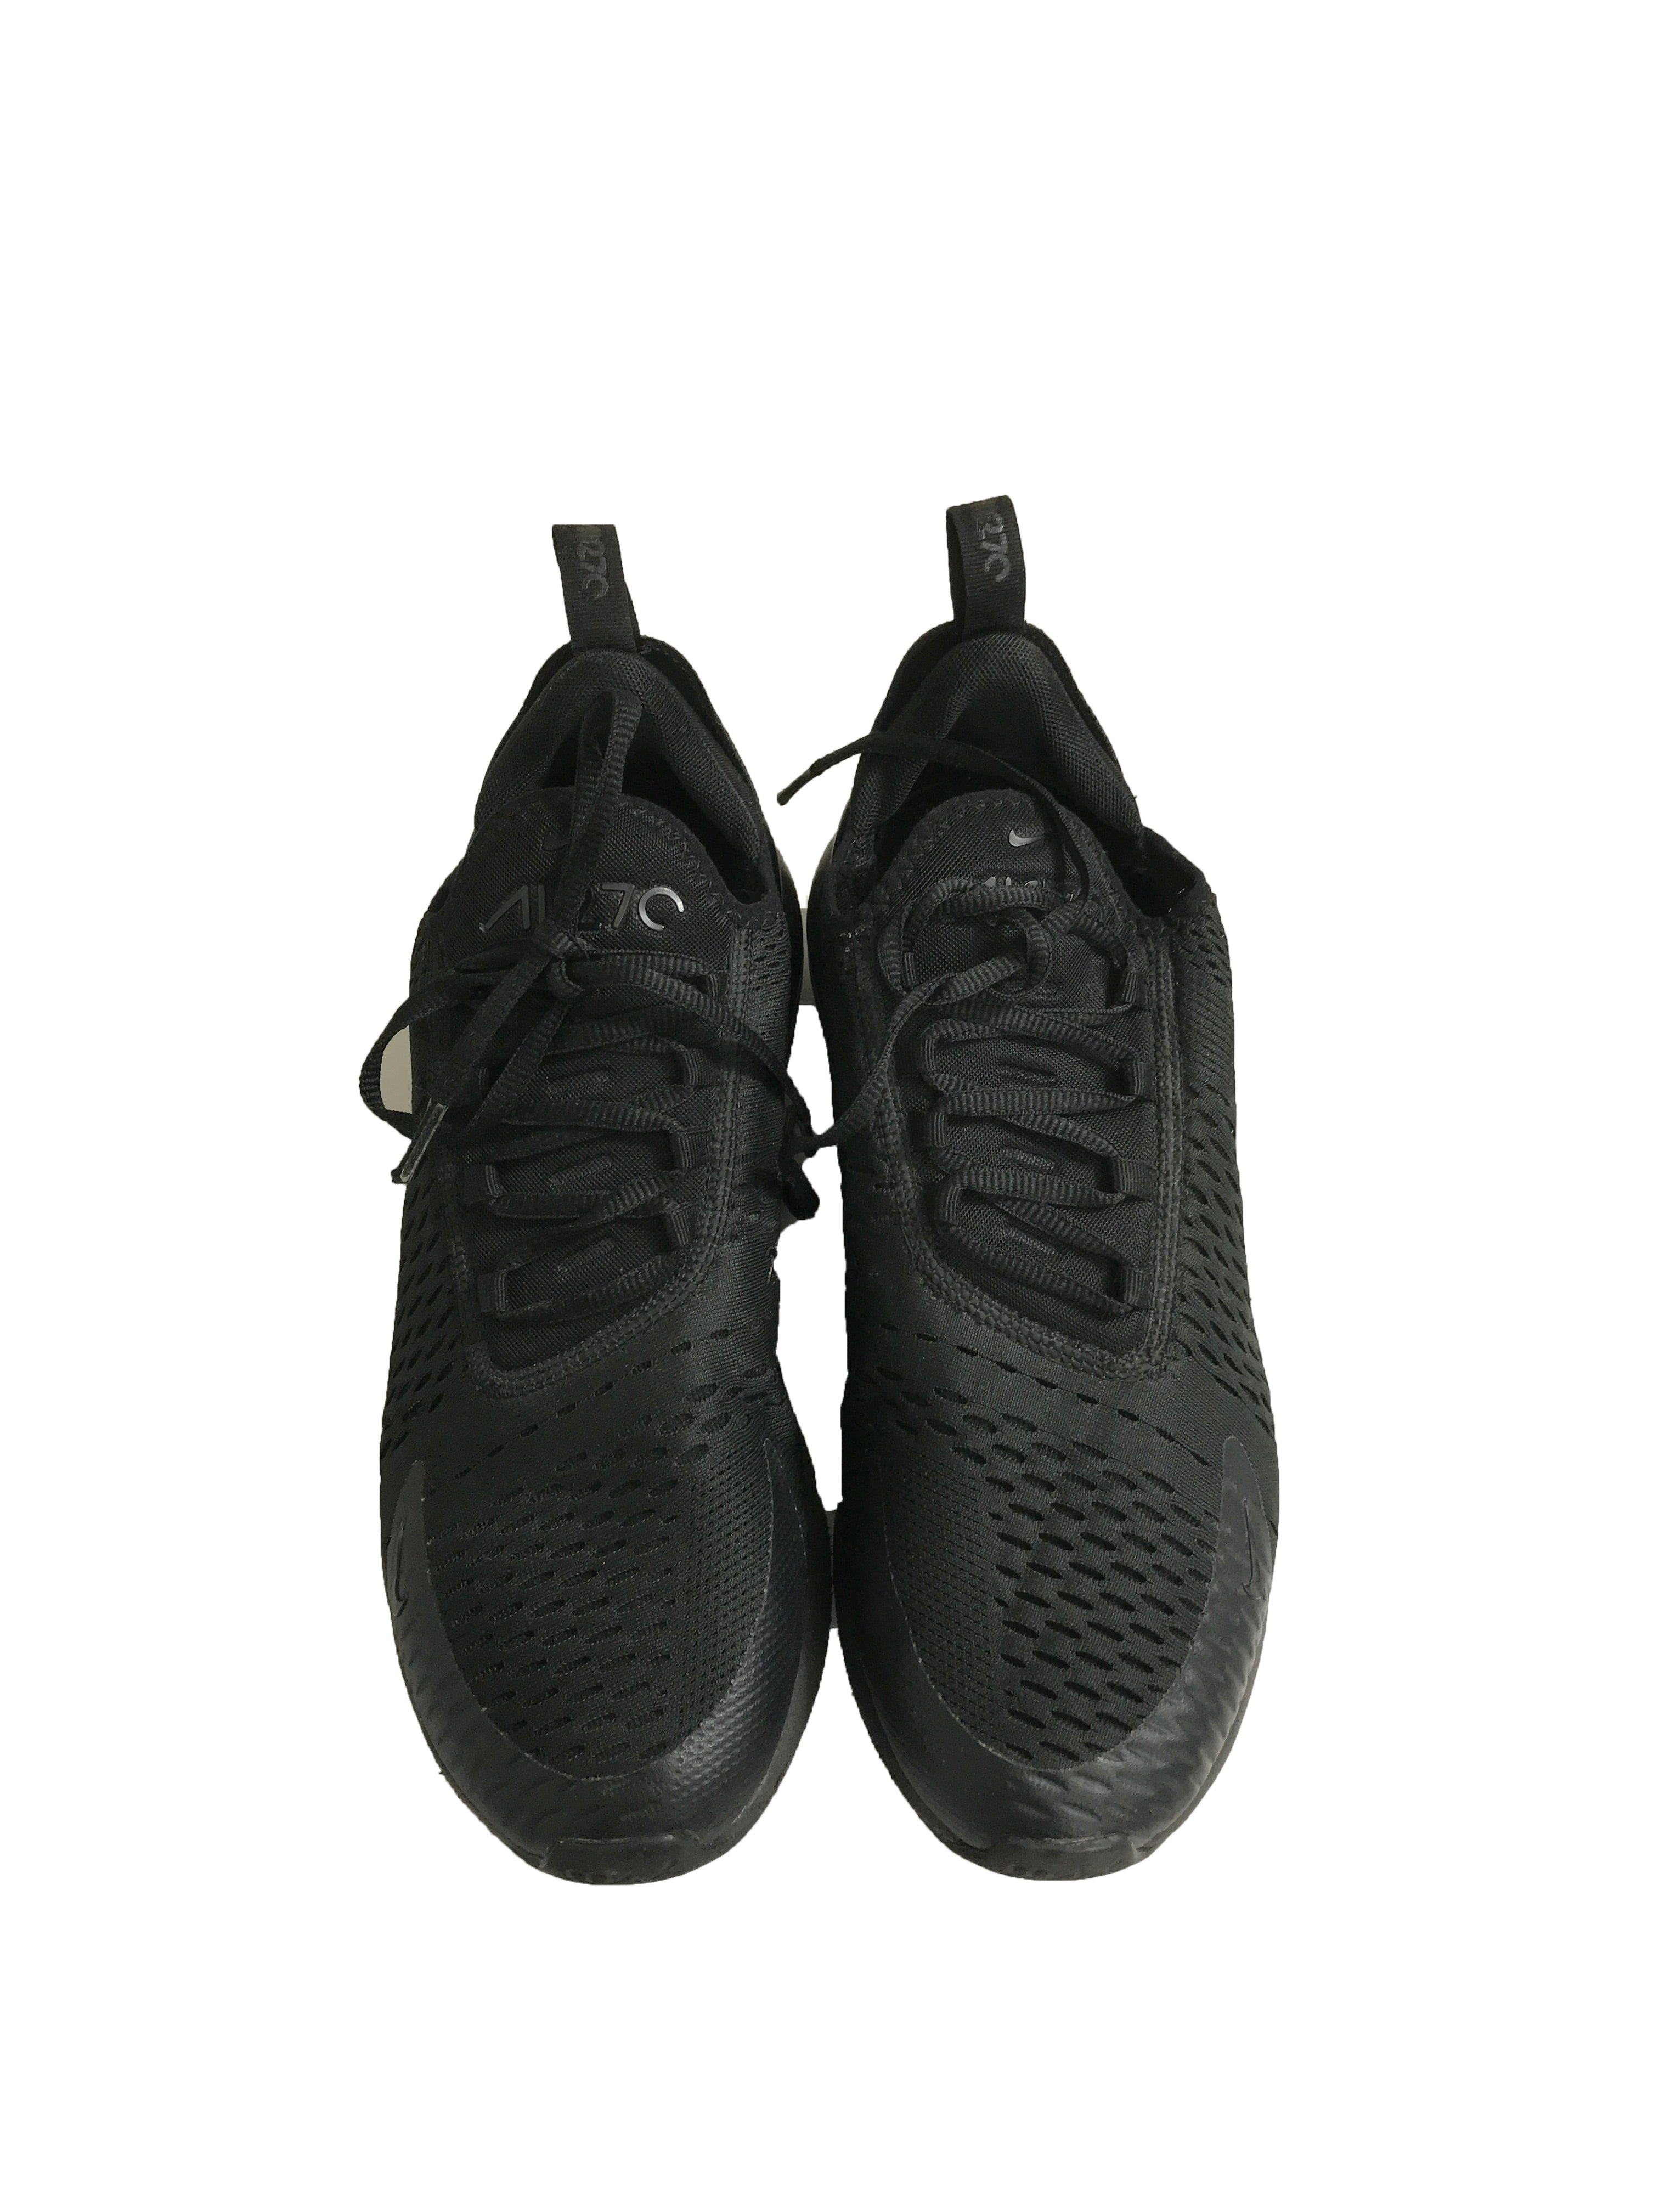 Nike Black Air Max 270 Men's Size 10.5